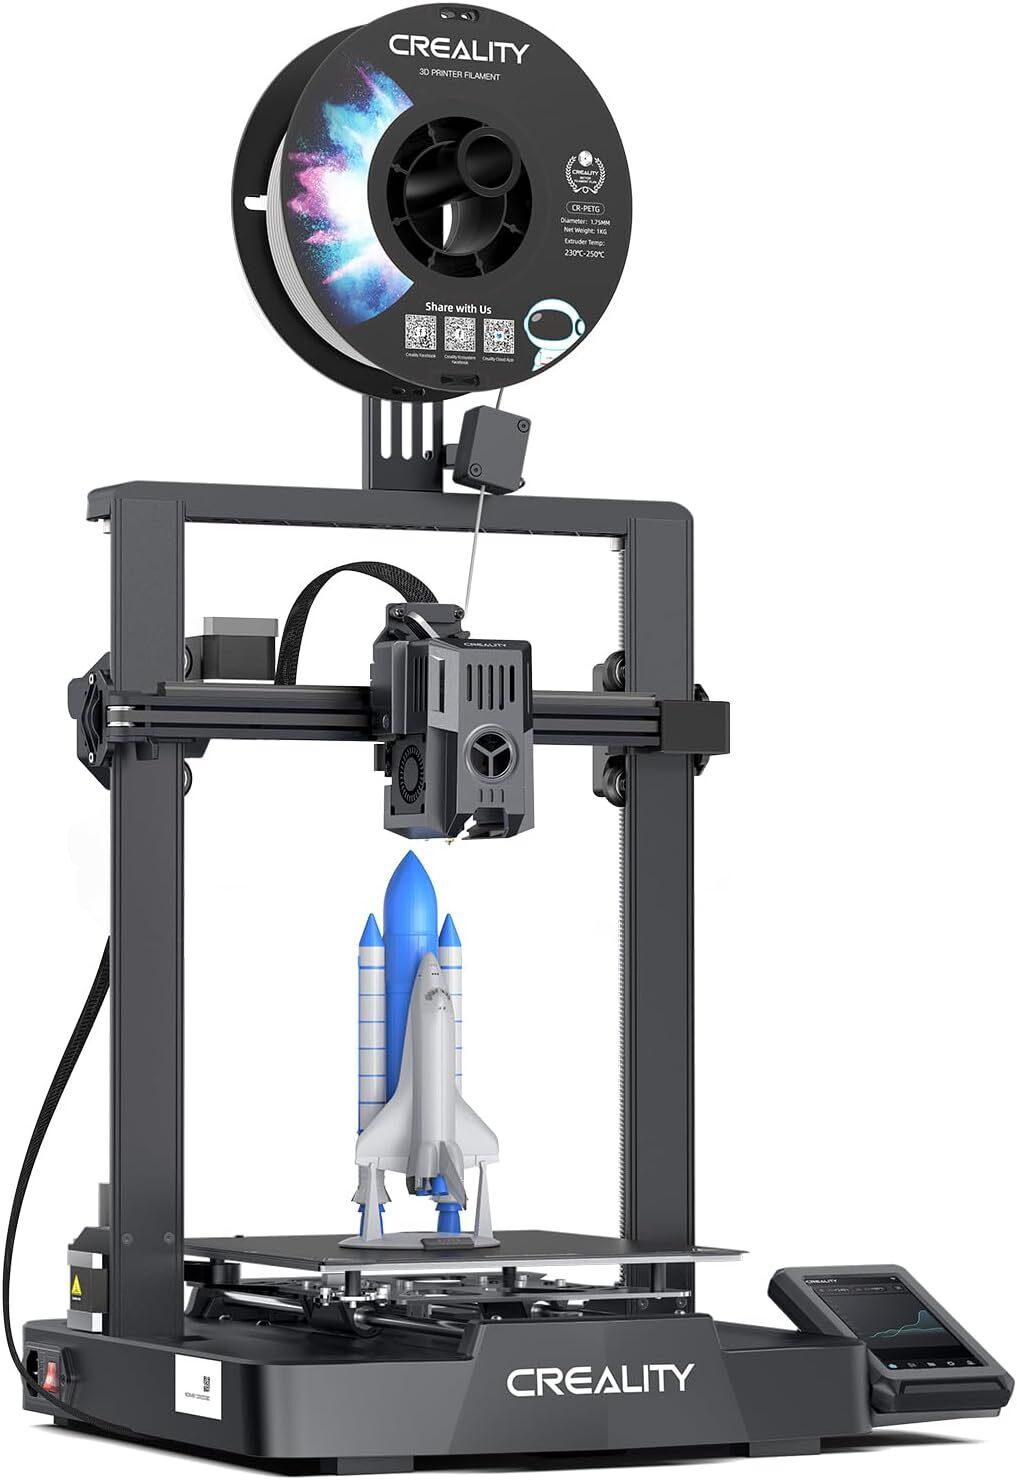 Official Creality Ender 3V3 KE 3D Printer 500mm/s MAX Print Speed 220*220*240mm